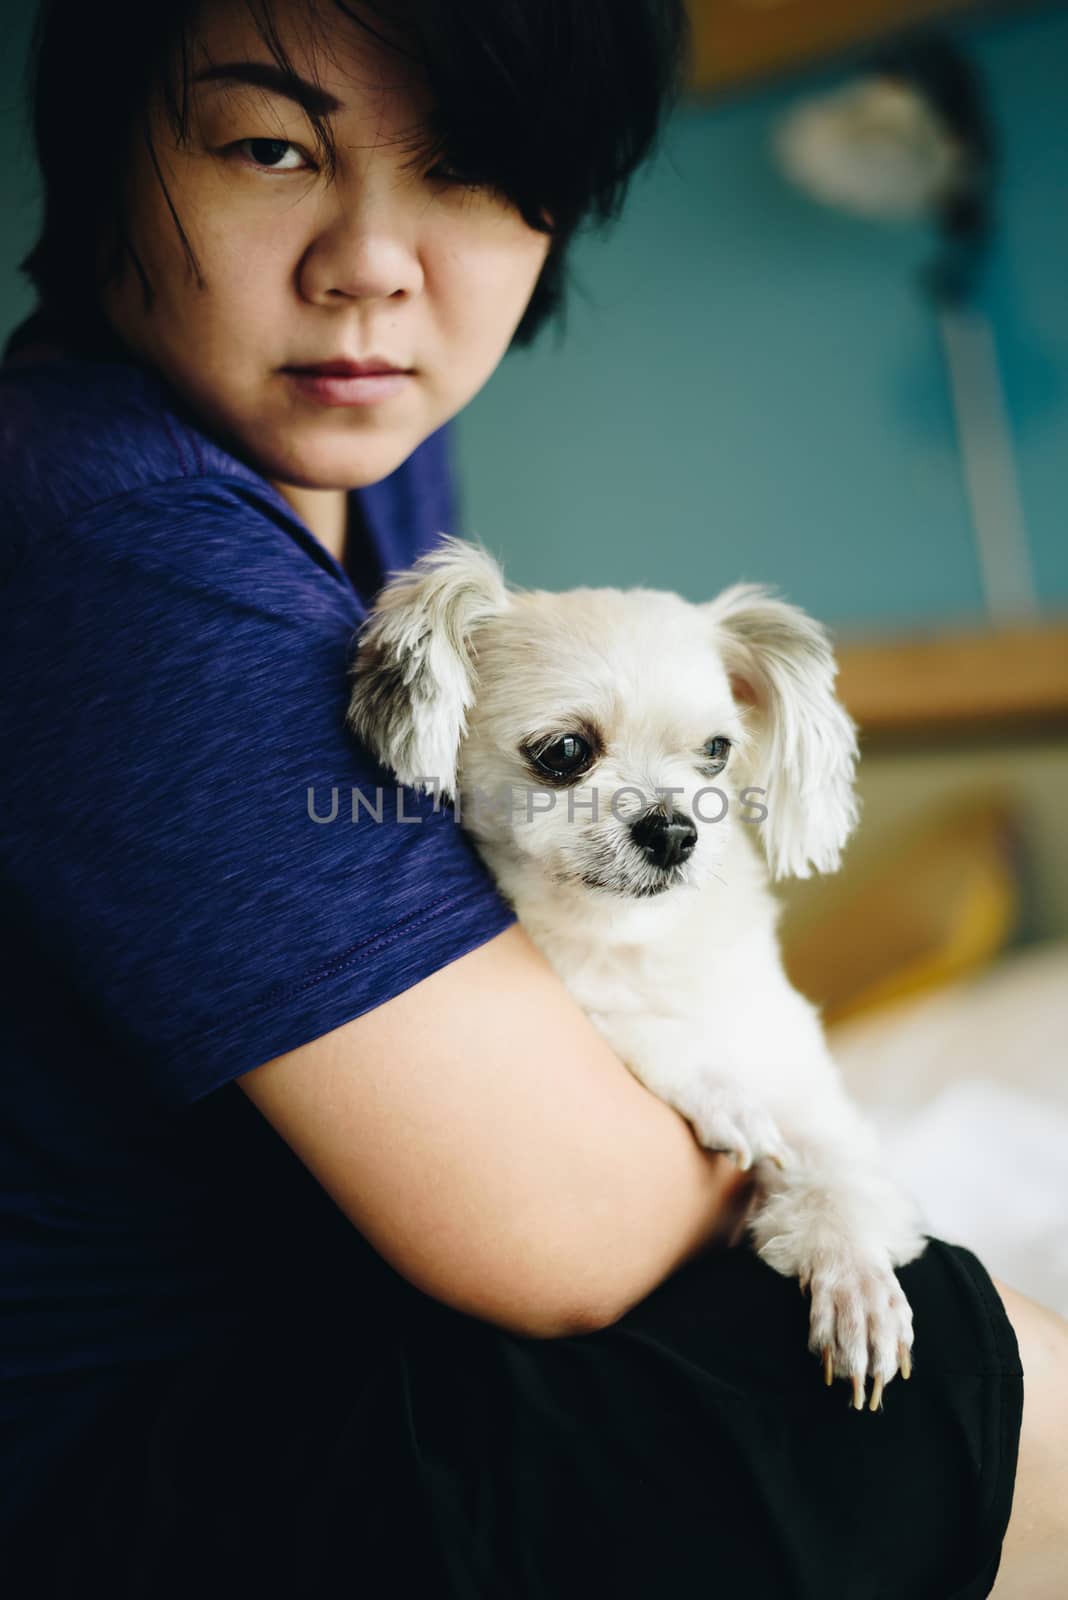 Asian woman hugging dog so cute on bed in bedroom by PongMoji